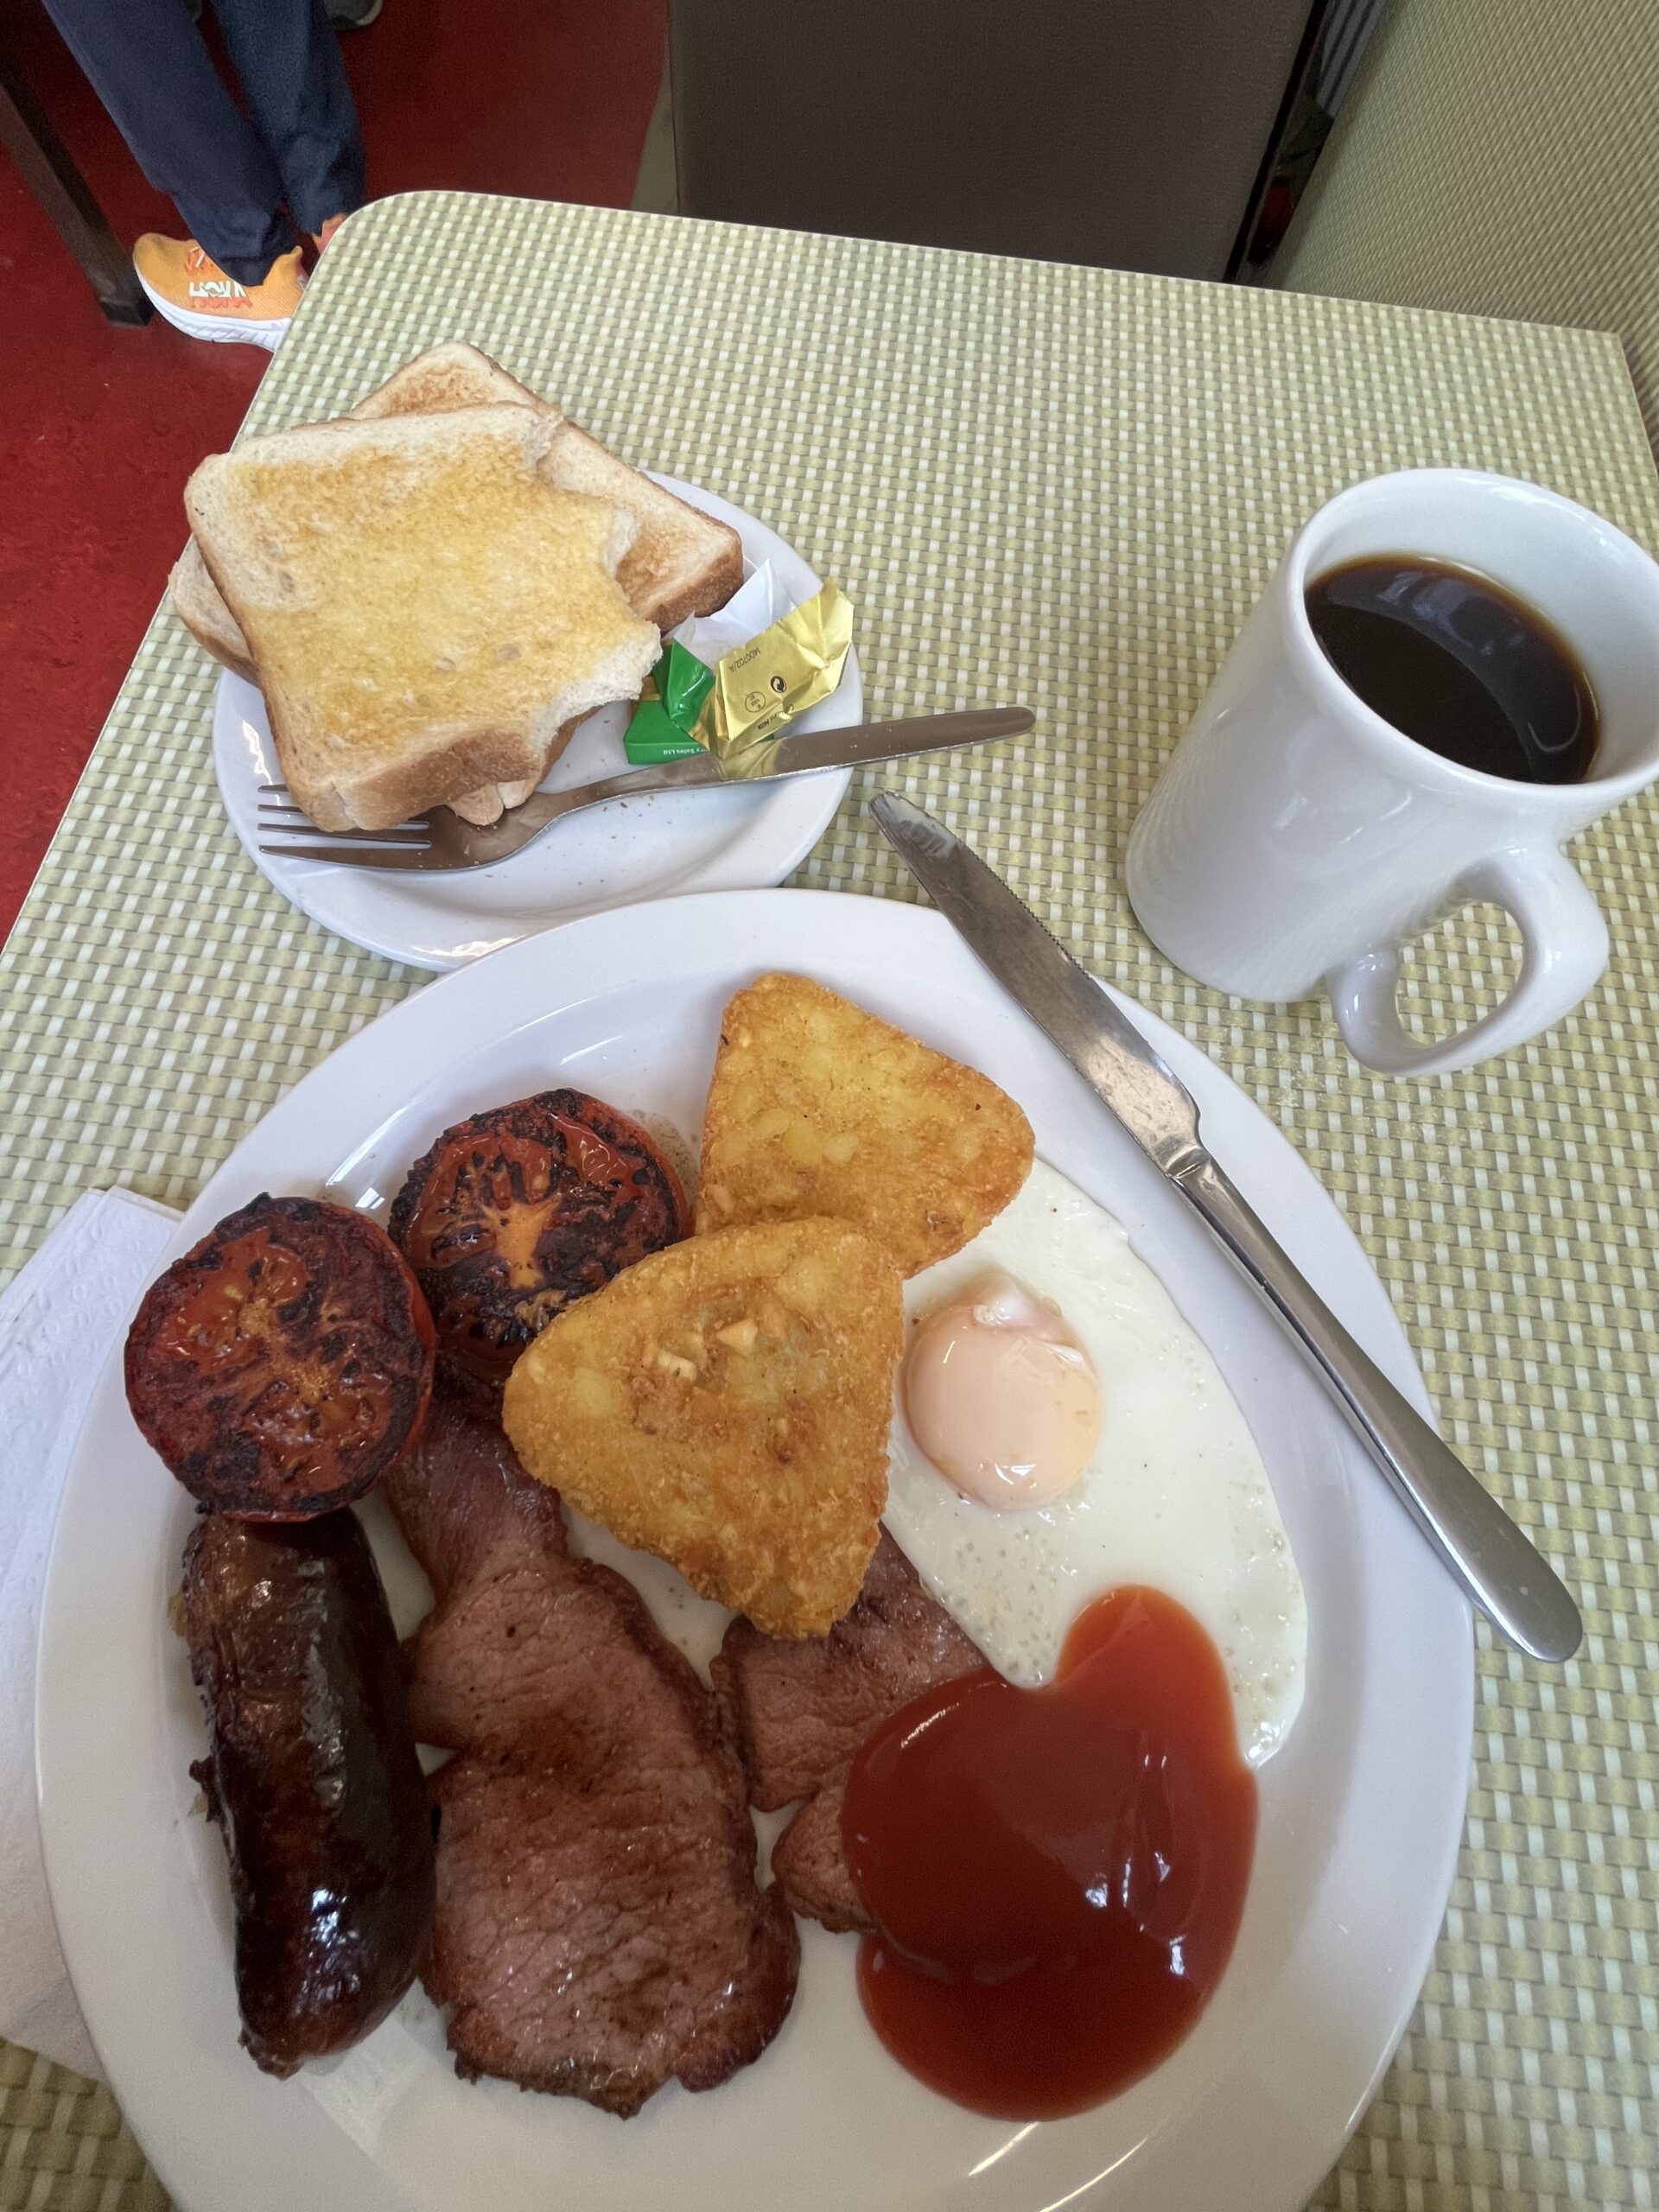 A Proper English Breakfast